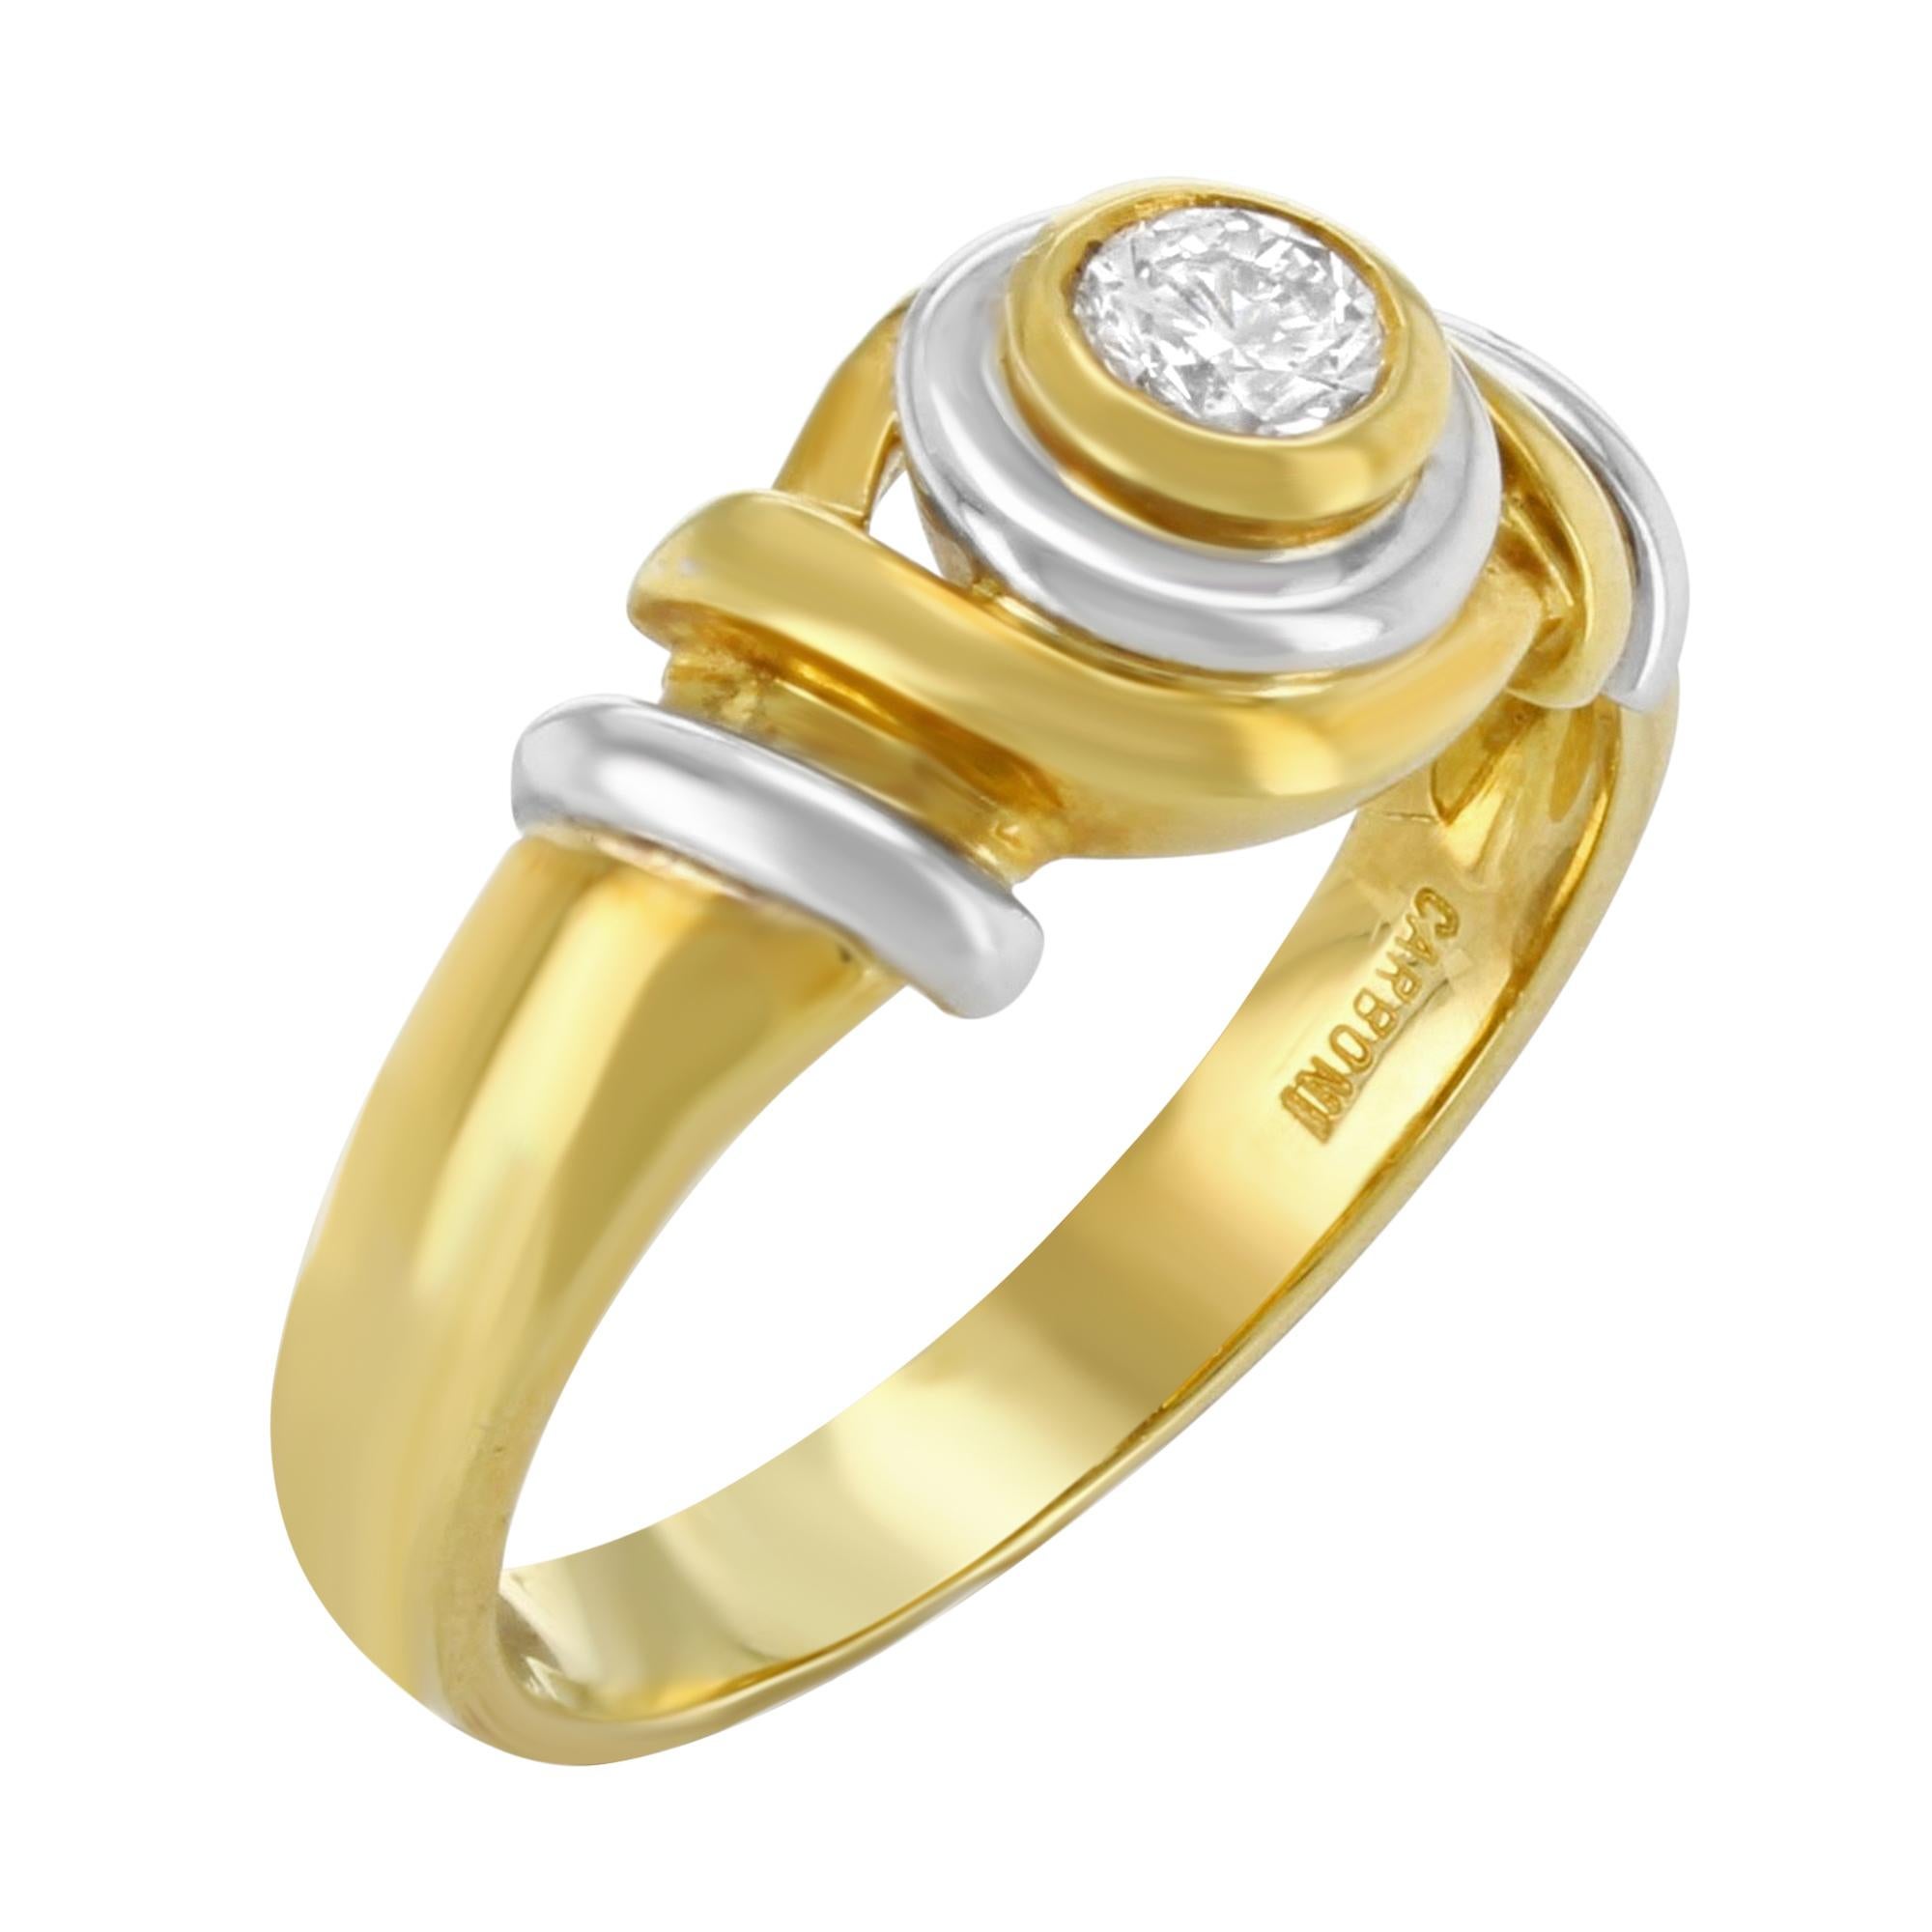 Modern Rachel Koen Diamond Ladies Ring 18K Yellow White Gold 0.20 Cttw For Sale